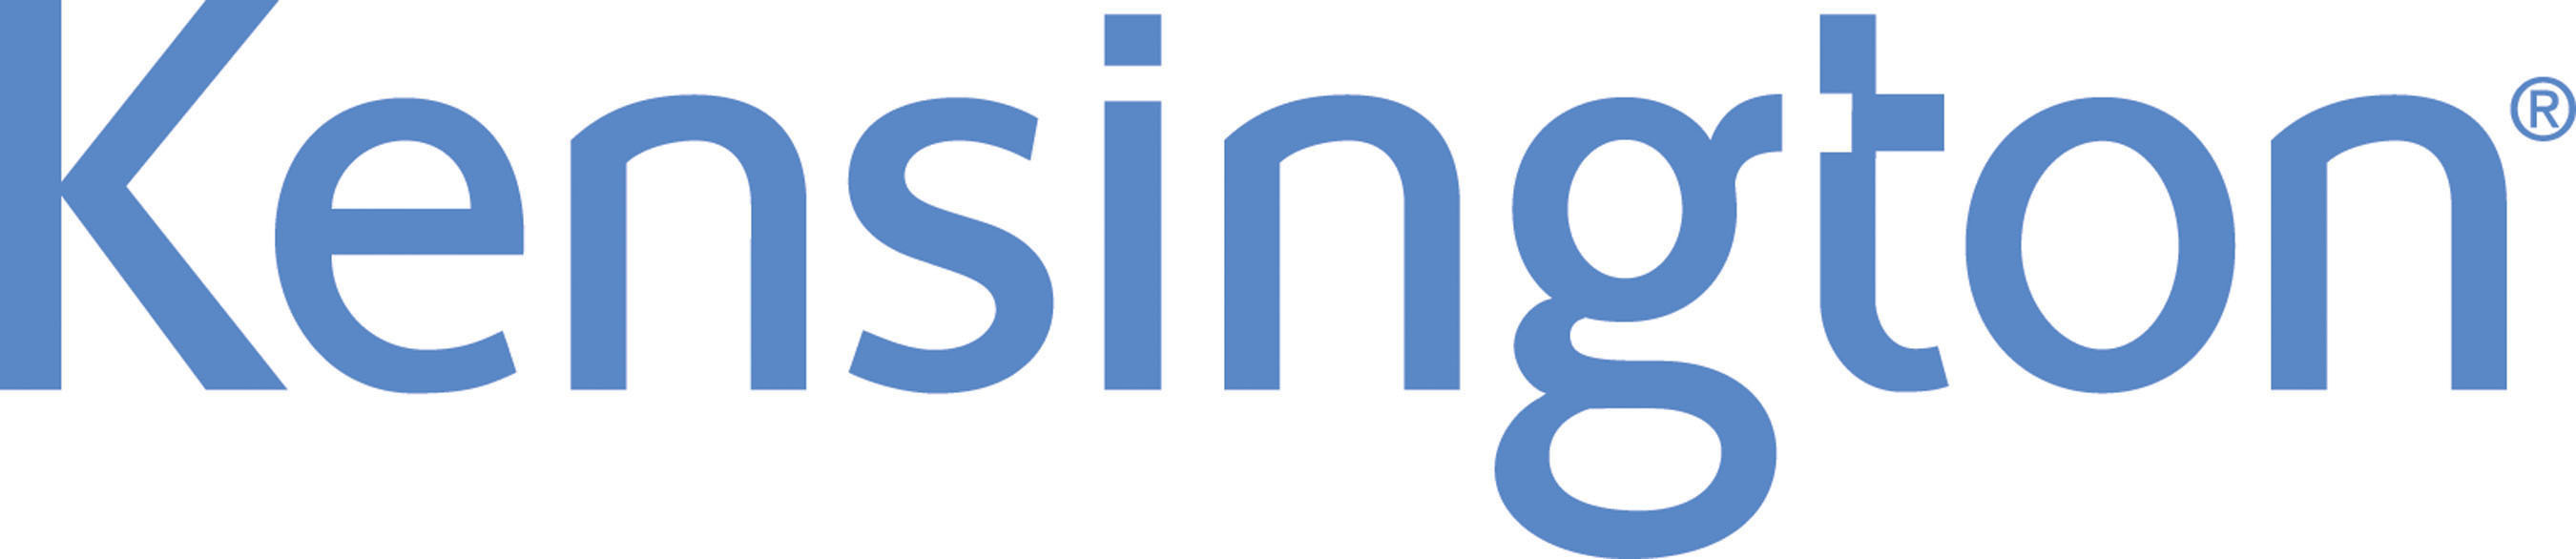 Kensington Logo. (PRNewsFoto/Kensington Computer Products Group) (PRNewsFoto/)